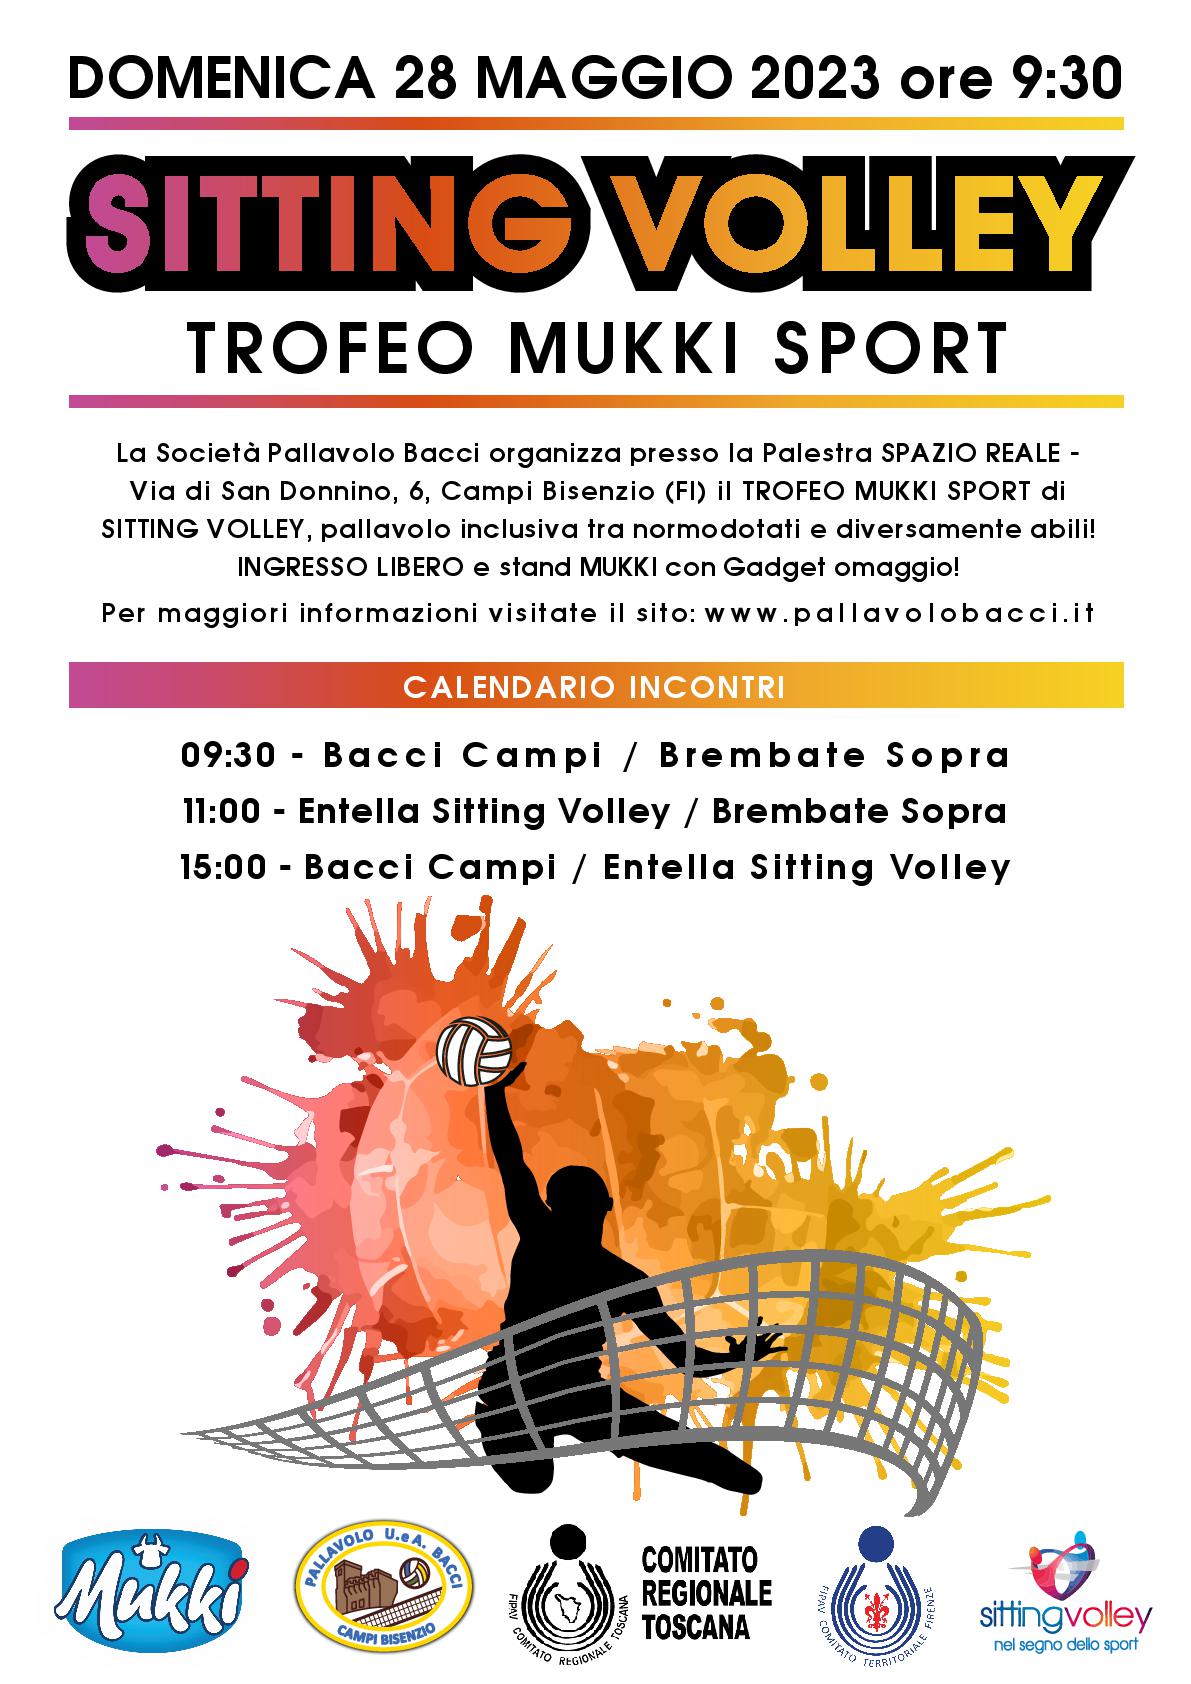 Volantino Trofeo Mukki sport 2023 MOD-001